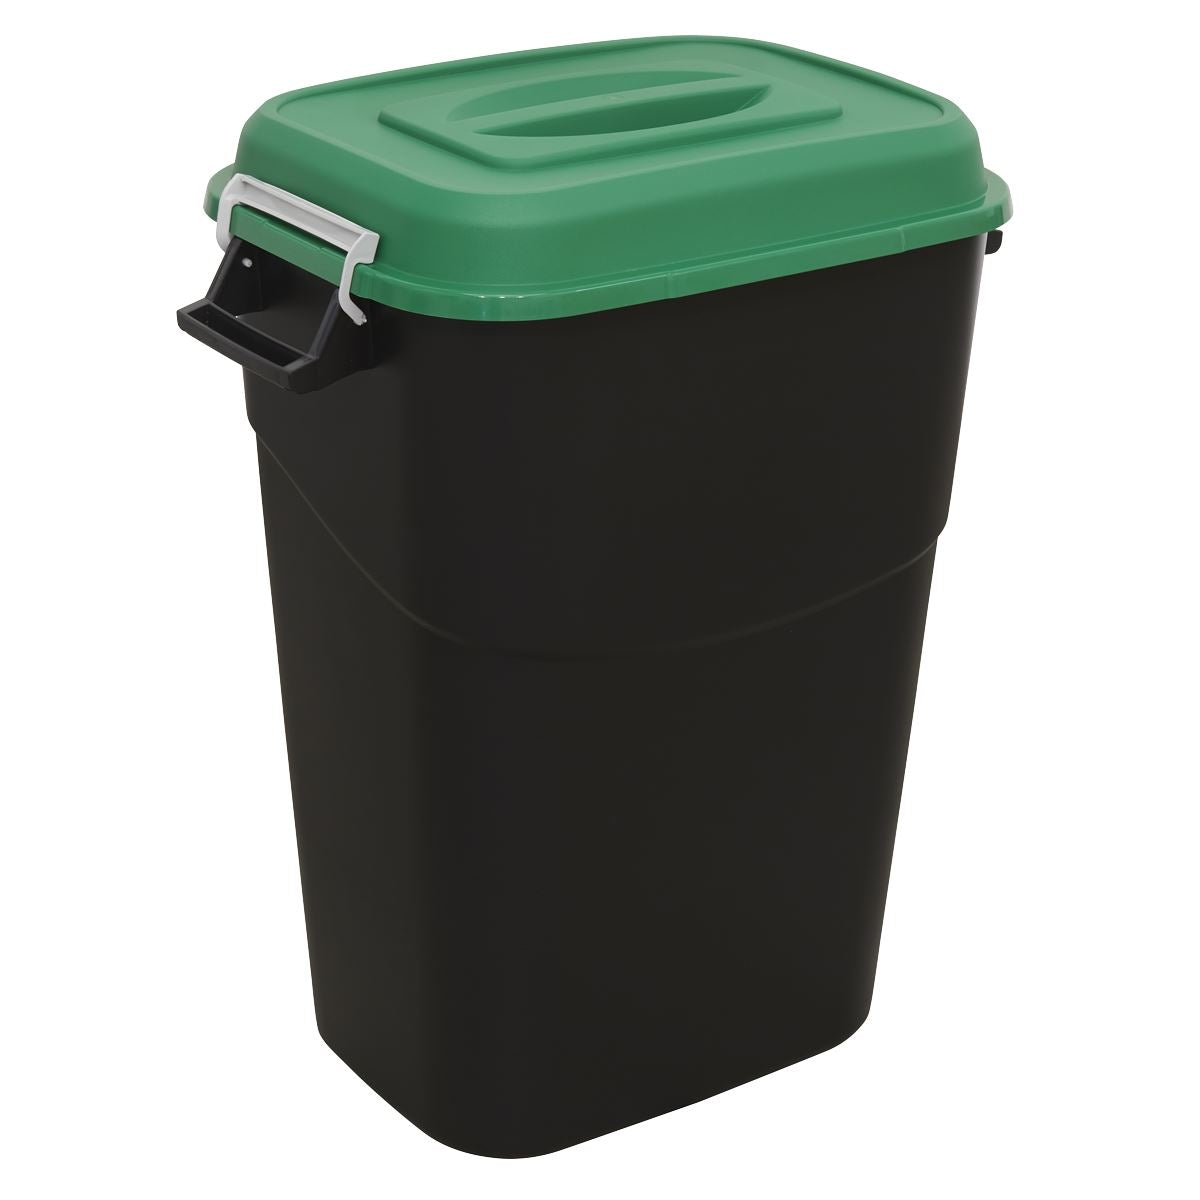 Sealey Refuse/Storage Bin 95L - Green